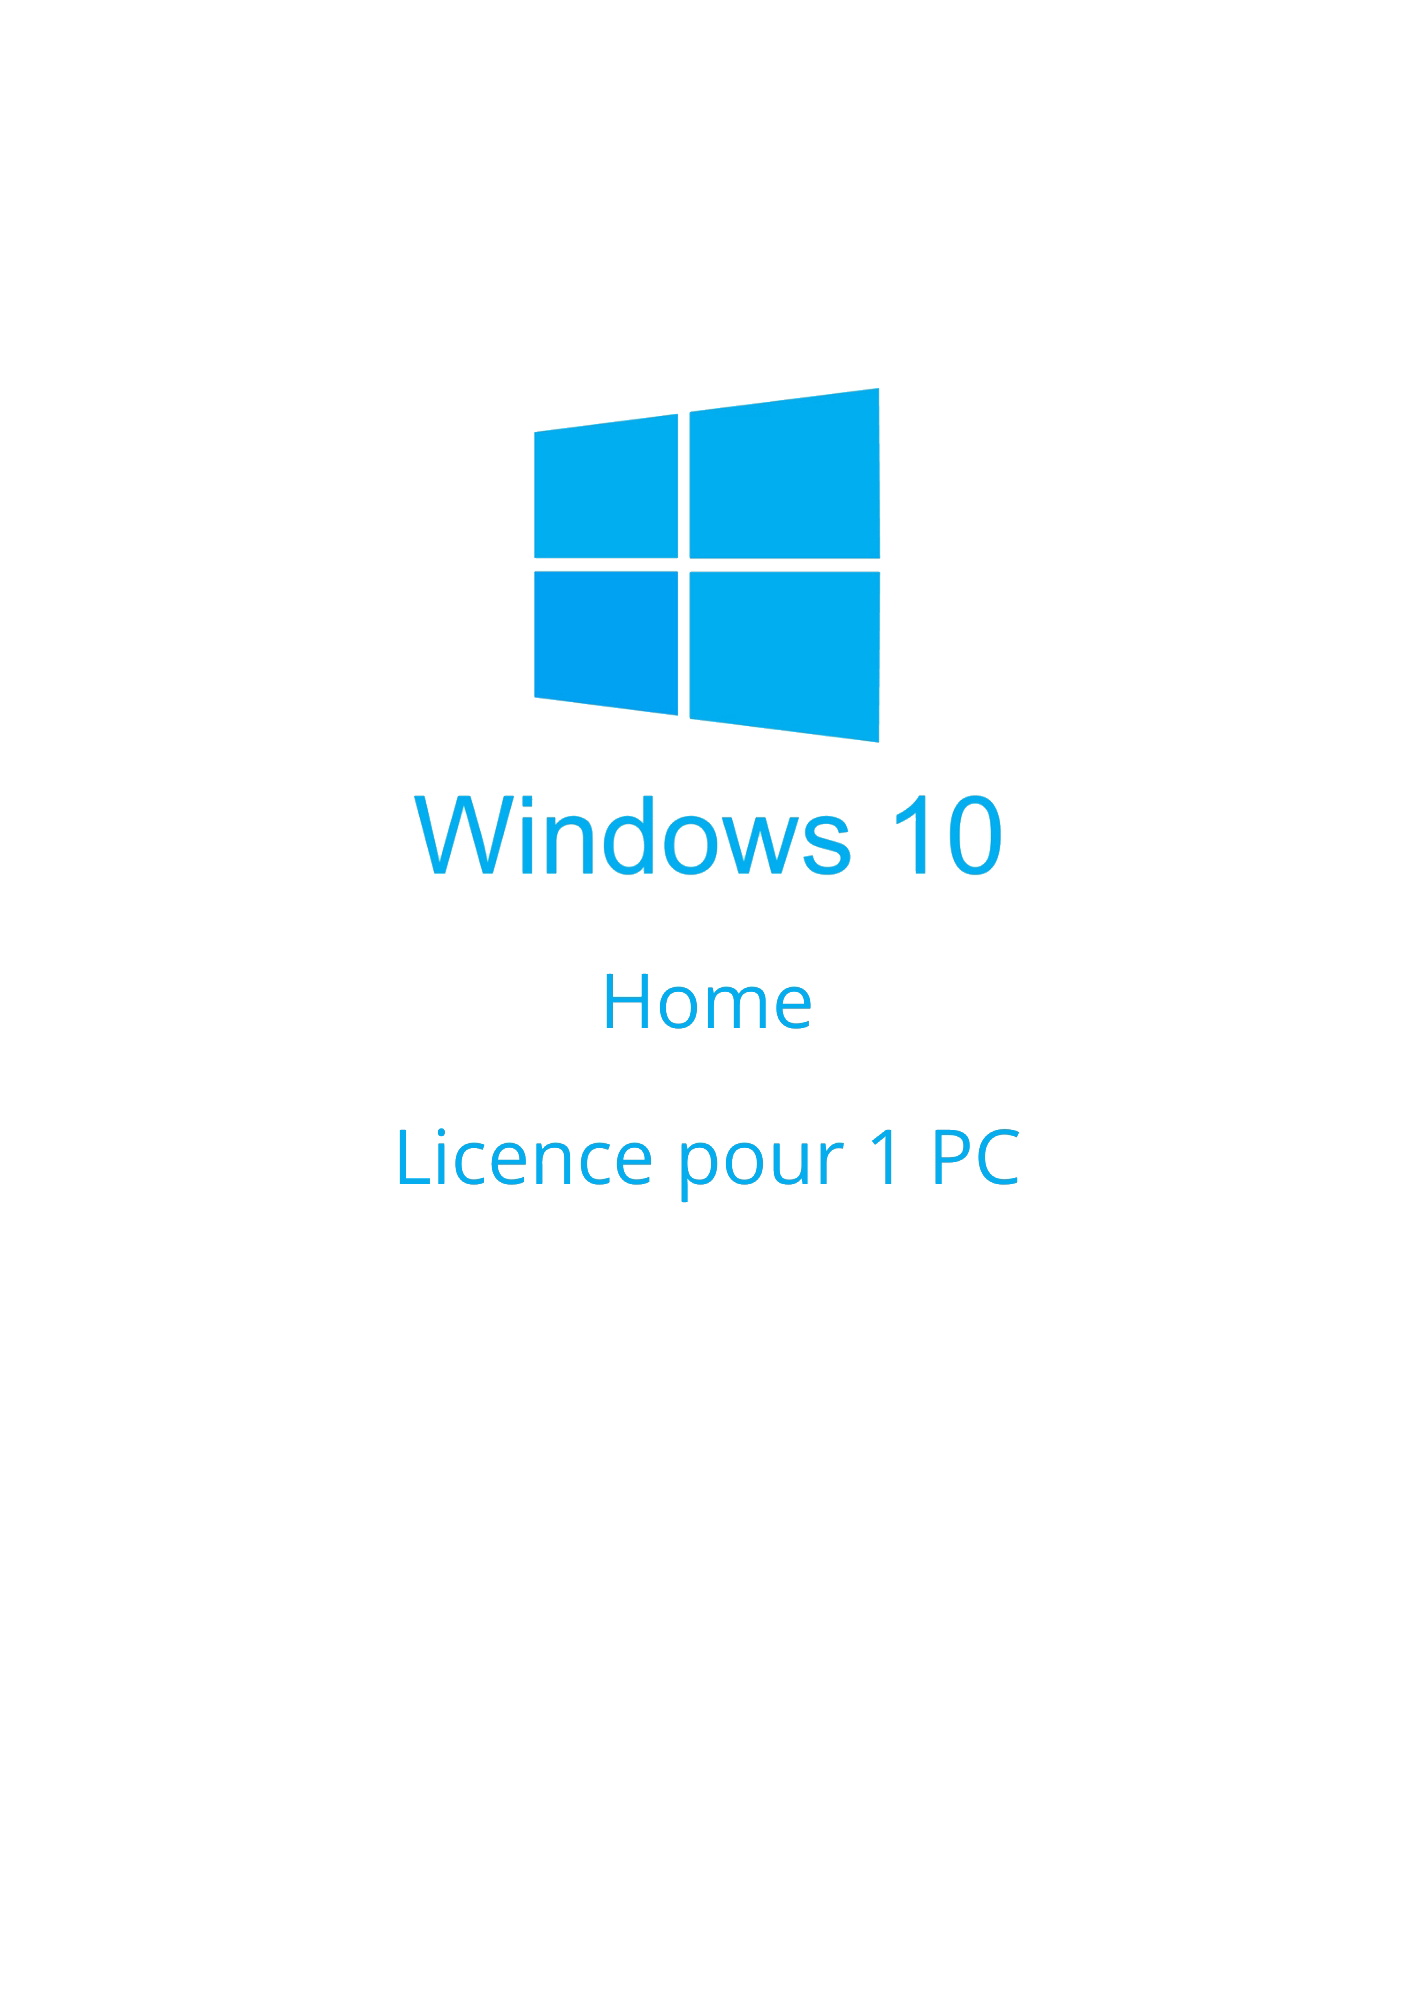 Windows Home 10